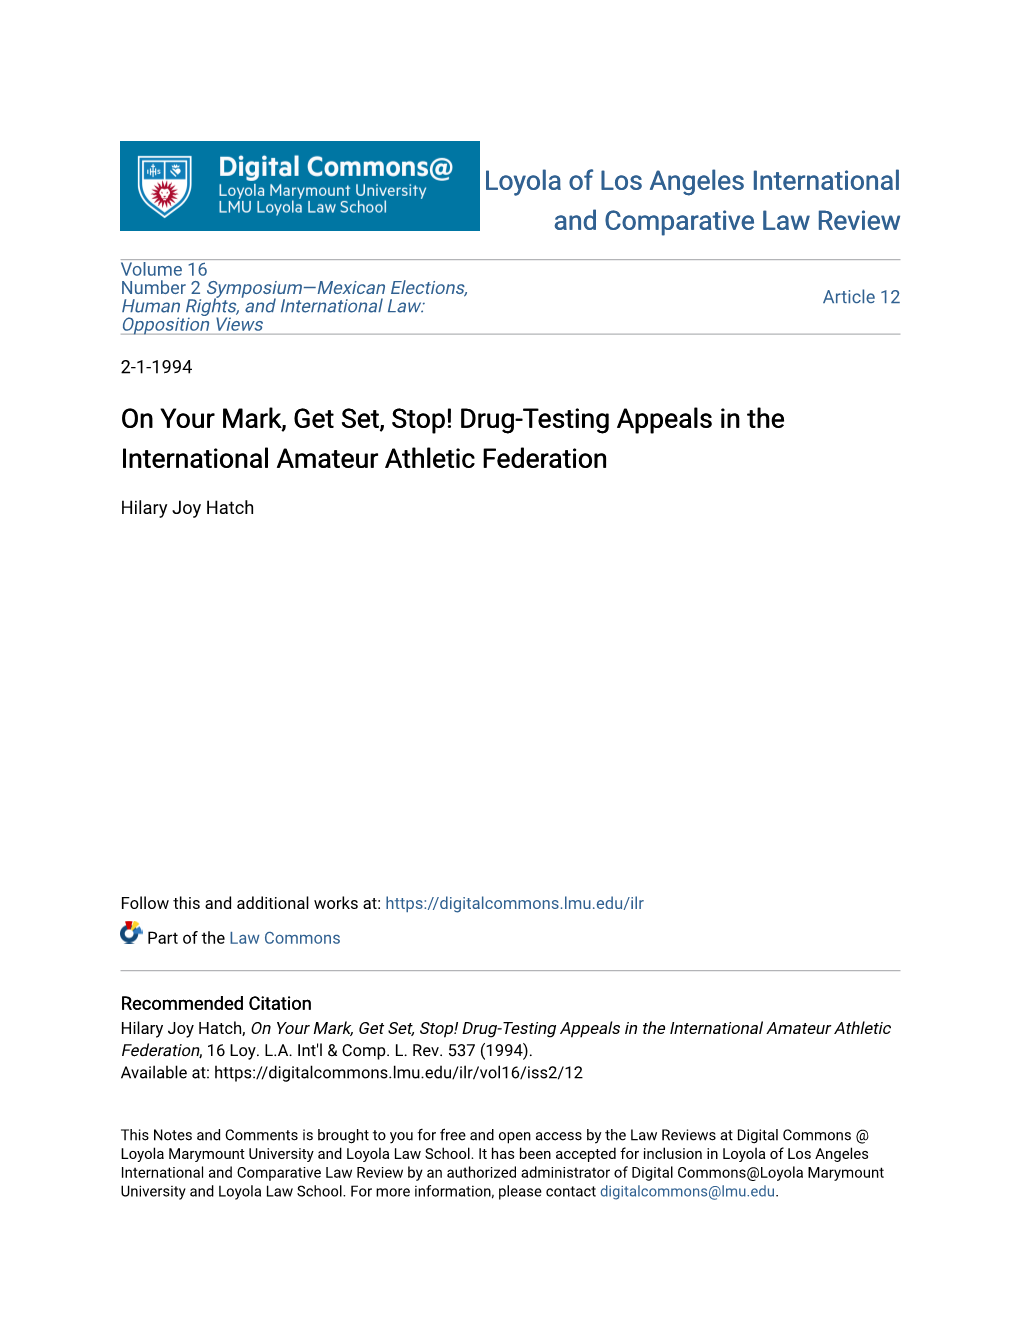 On Your Mark, Get Set, Stop! Drug-Testing Appeals in the International Amateur Athletic Federation